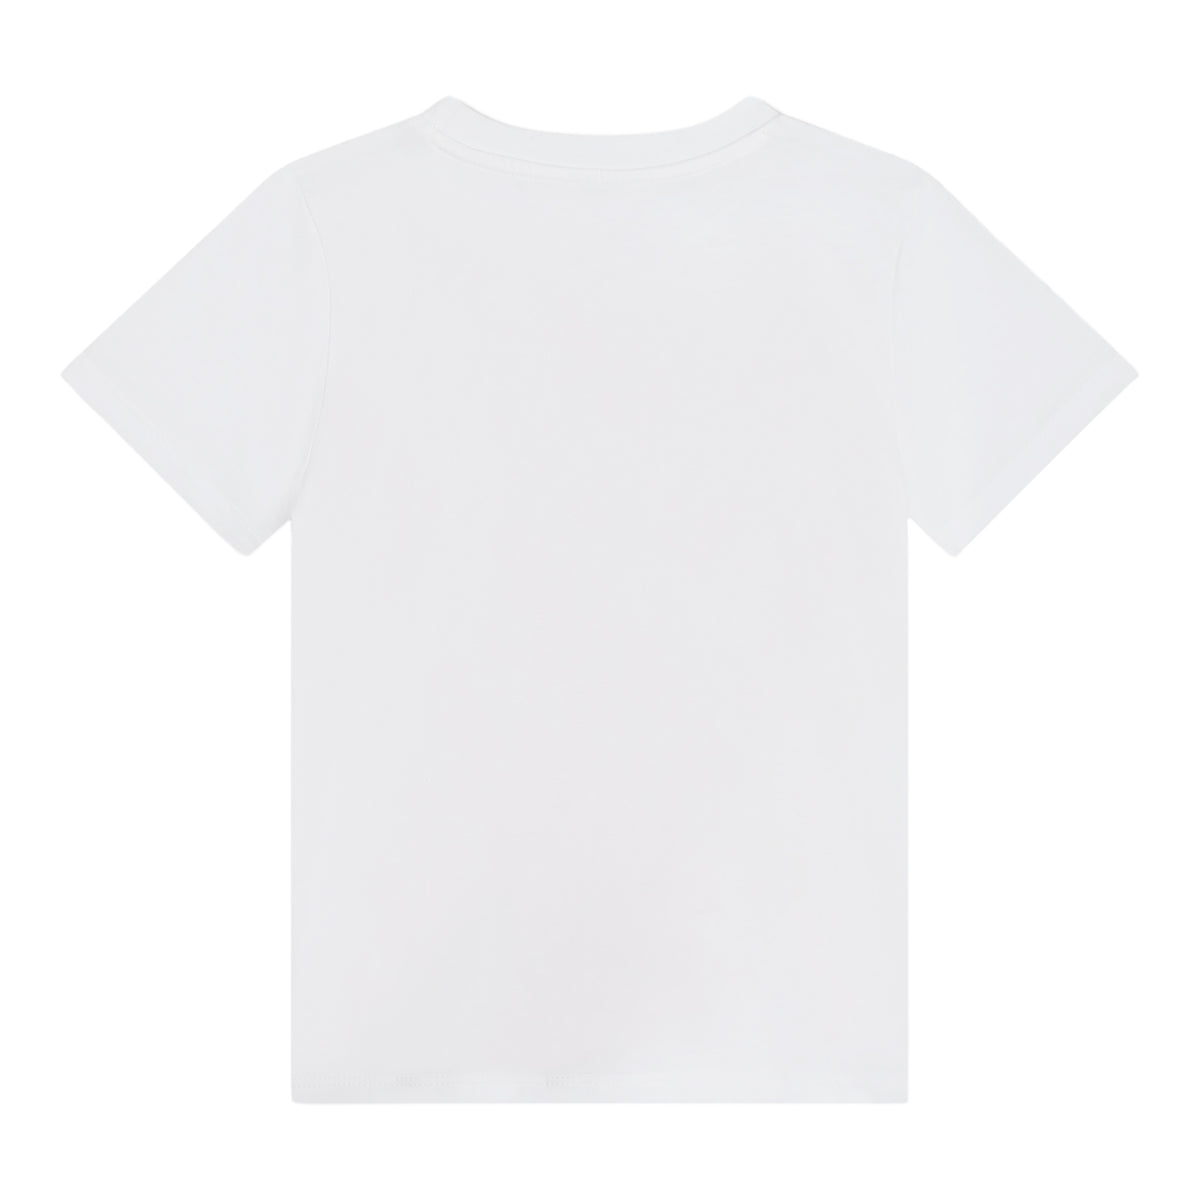 Kenzo Kids Elephant Logo Short Sleeve T-Shirt